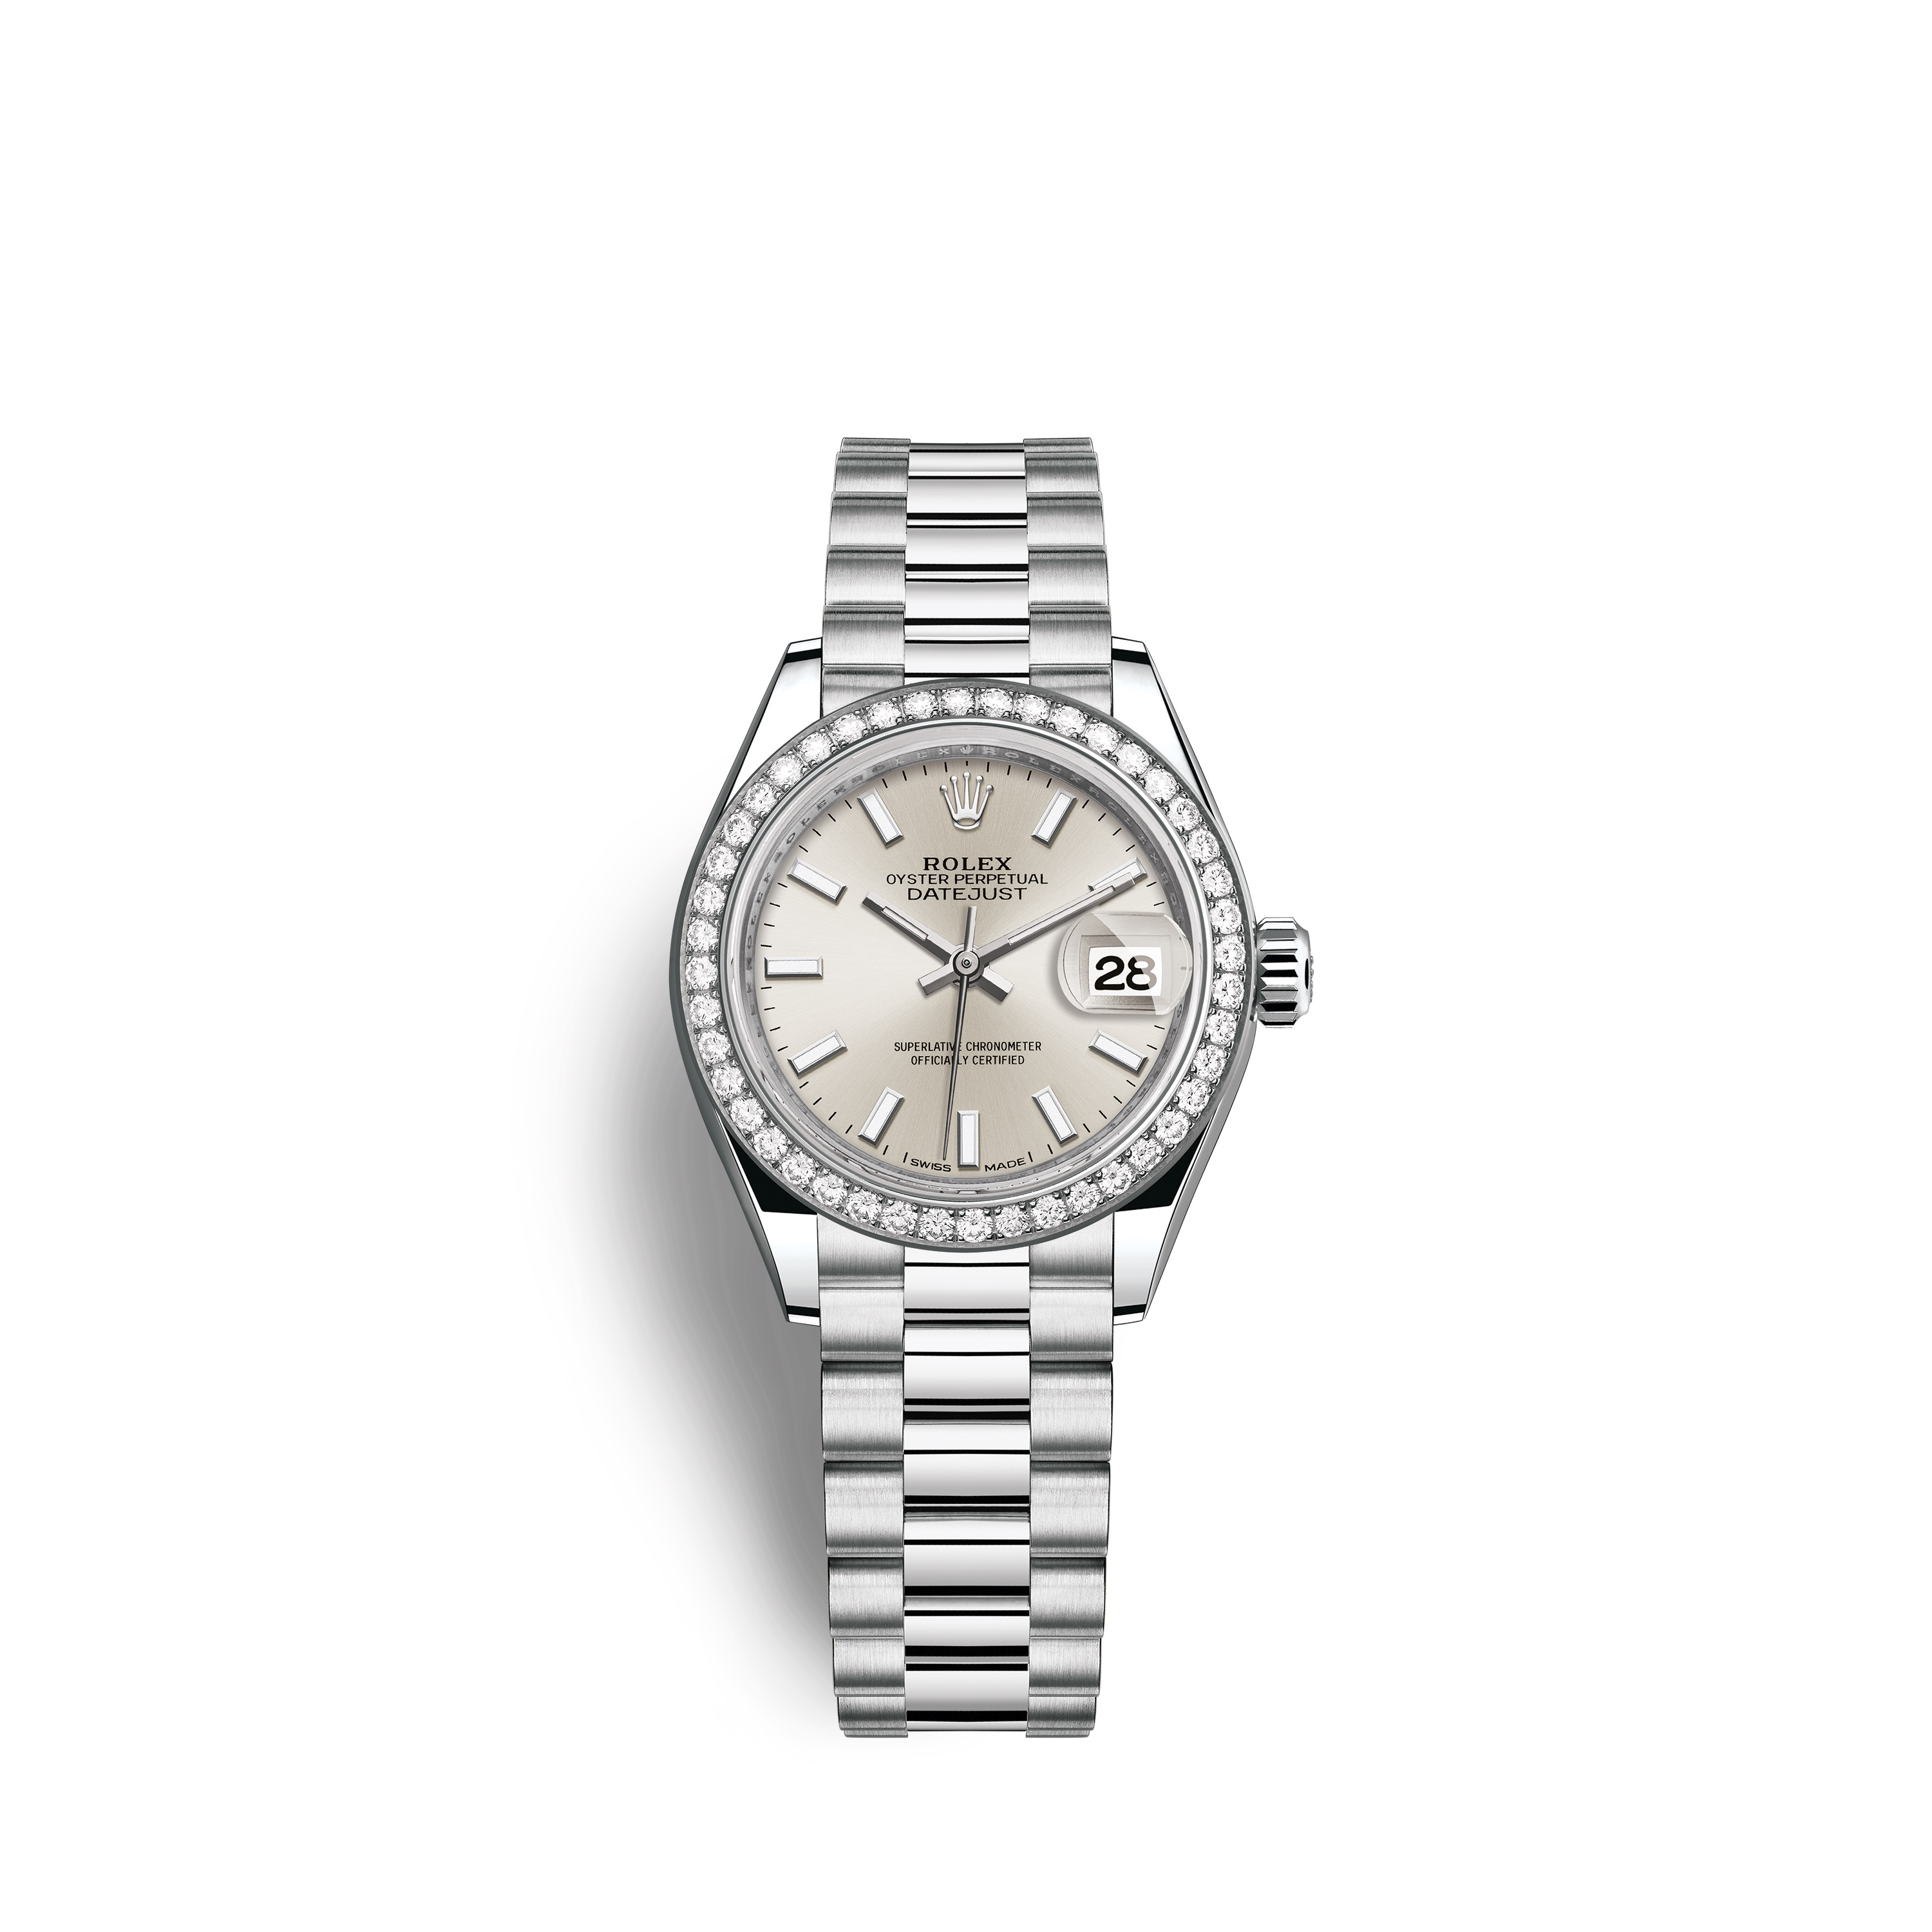 Lady-Datejust 28 279136RBR Platinum & Diamonds Watch (Silver)